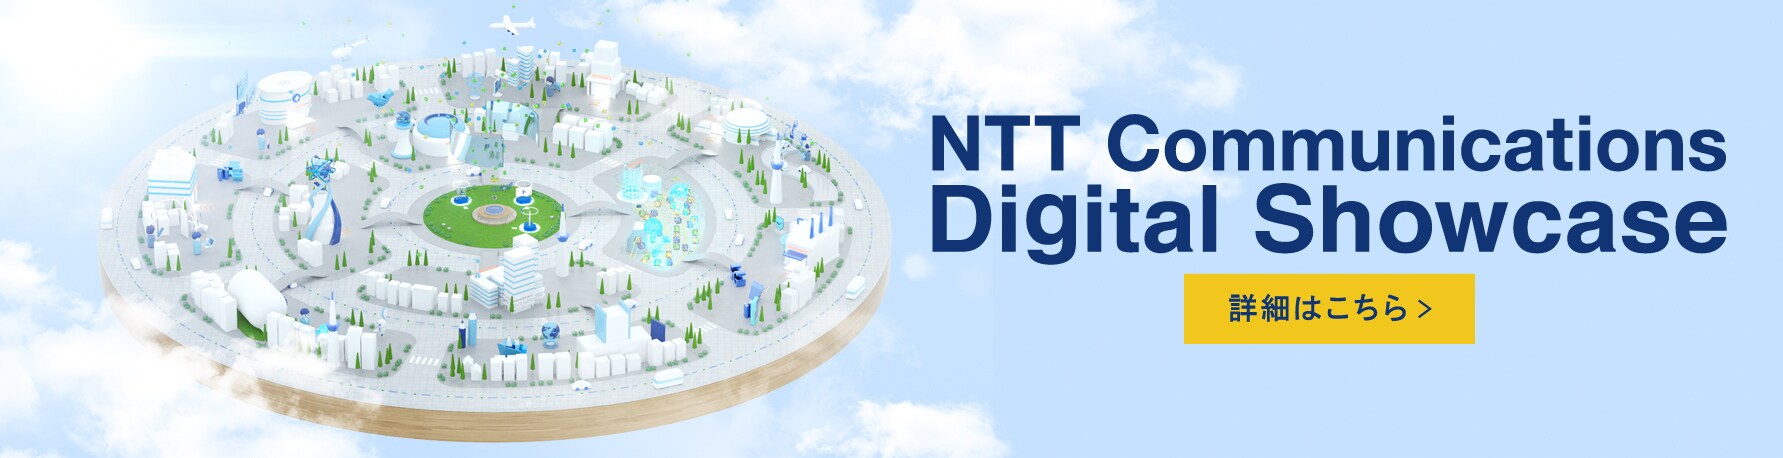 NTT Communications Digital Showcase